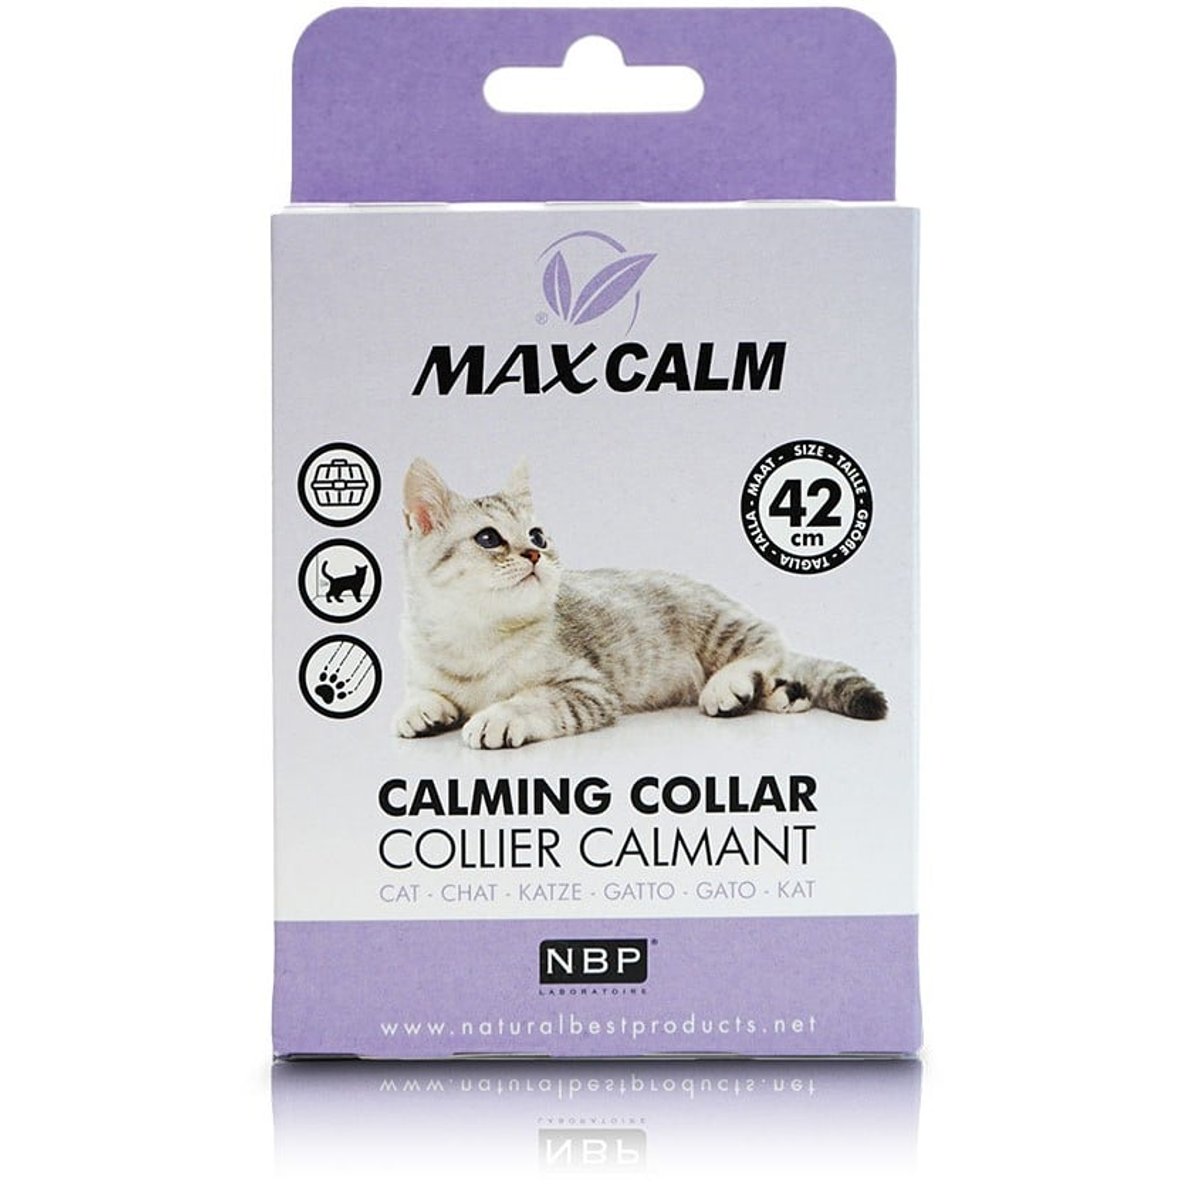 Max Calm zklidň.obojek proti stresu pro kočky 42cm